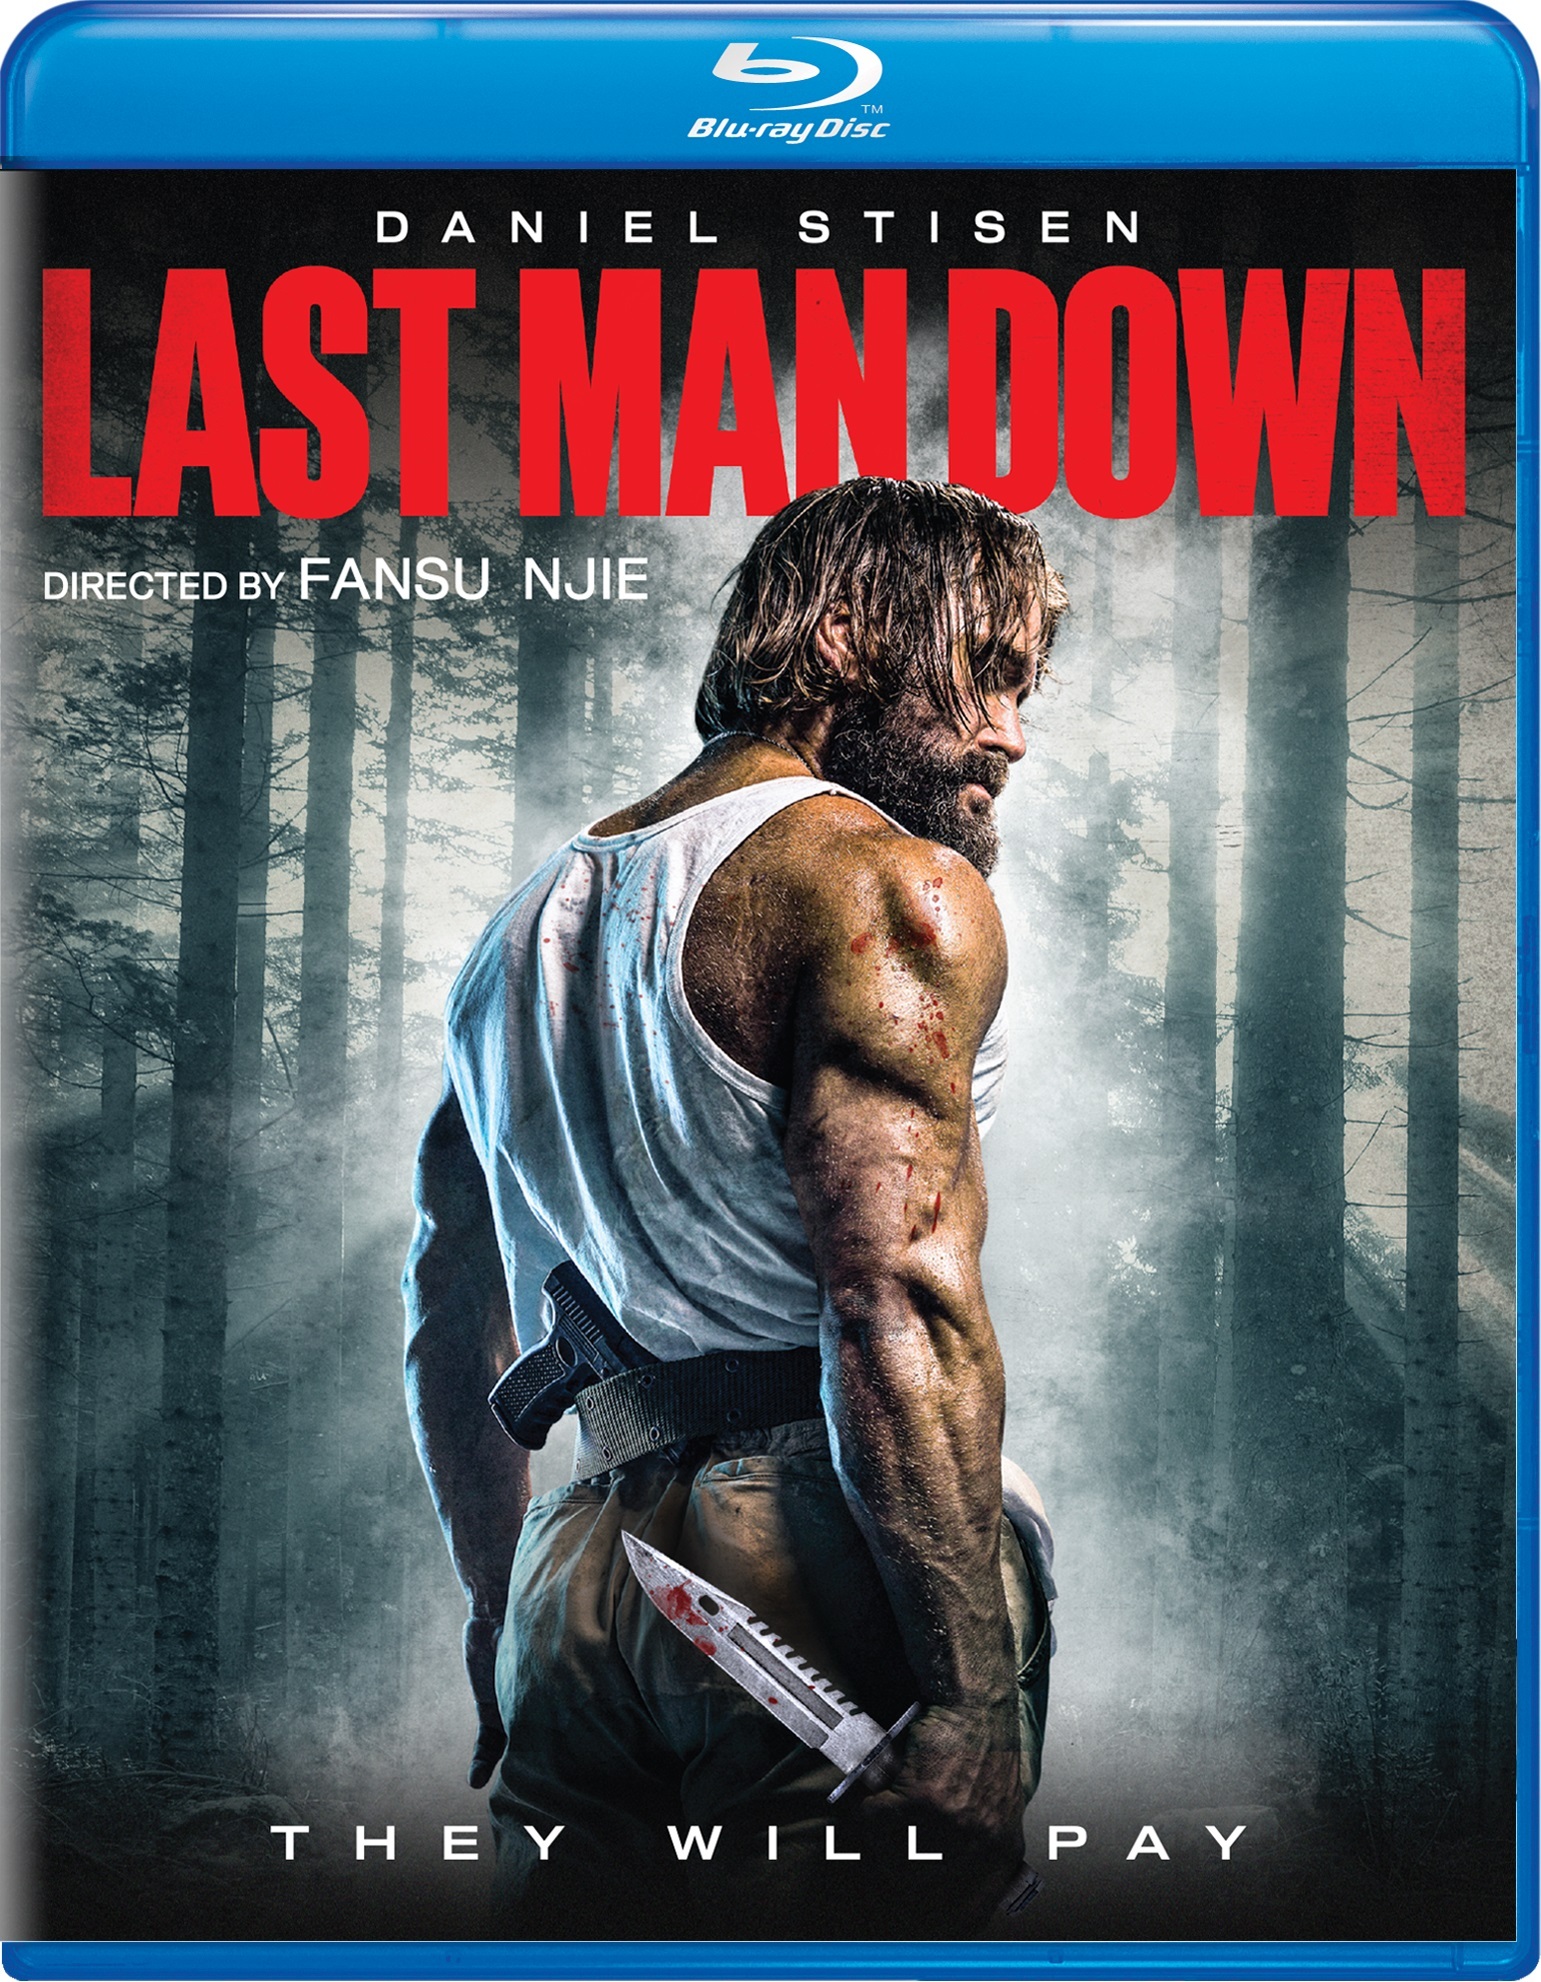 Last Man Down - Blu-ray [ 2021 ]  - Thriller Movies On Blu-ray - Movies On GRUV